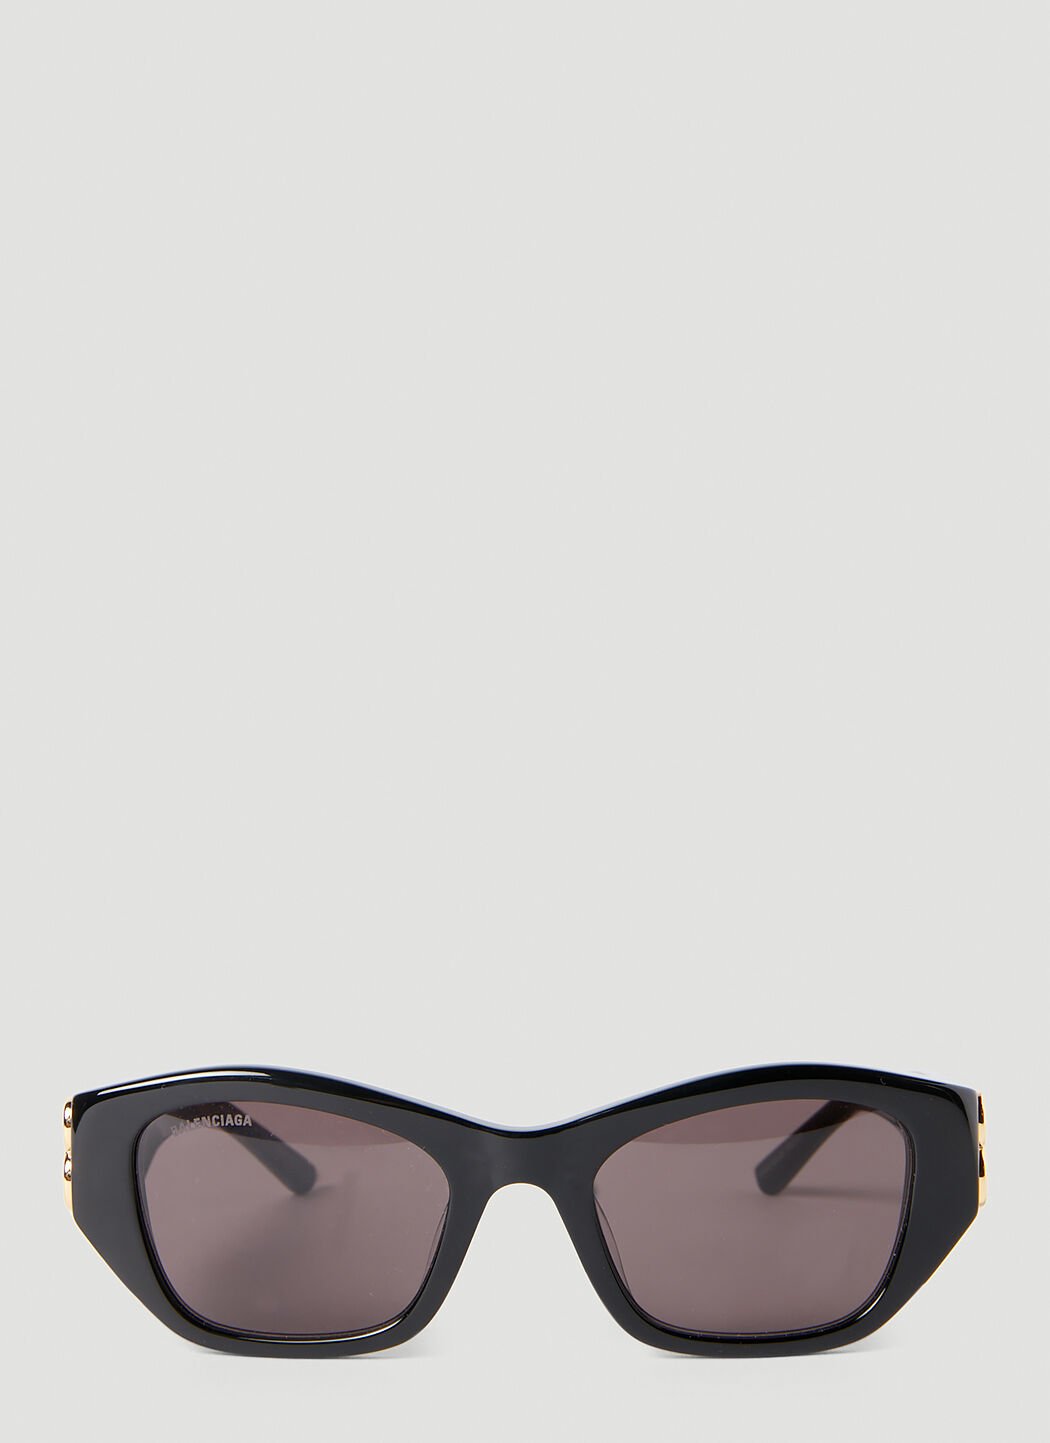 Burberry Dynasty Cat Sunglasses Beige bur0154025